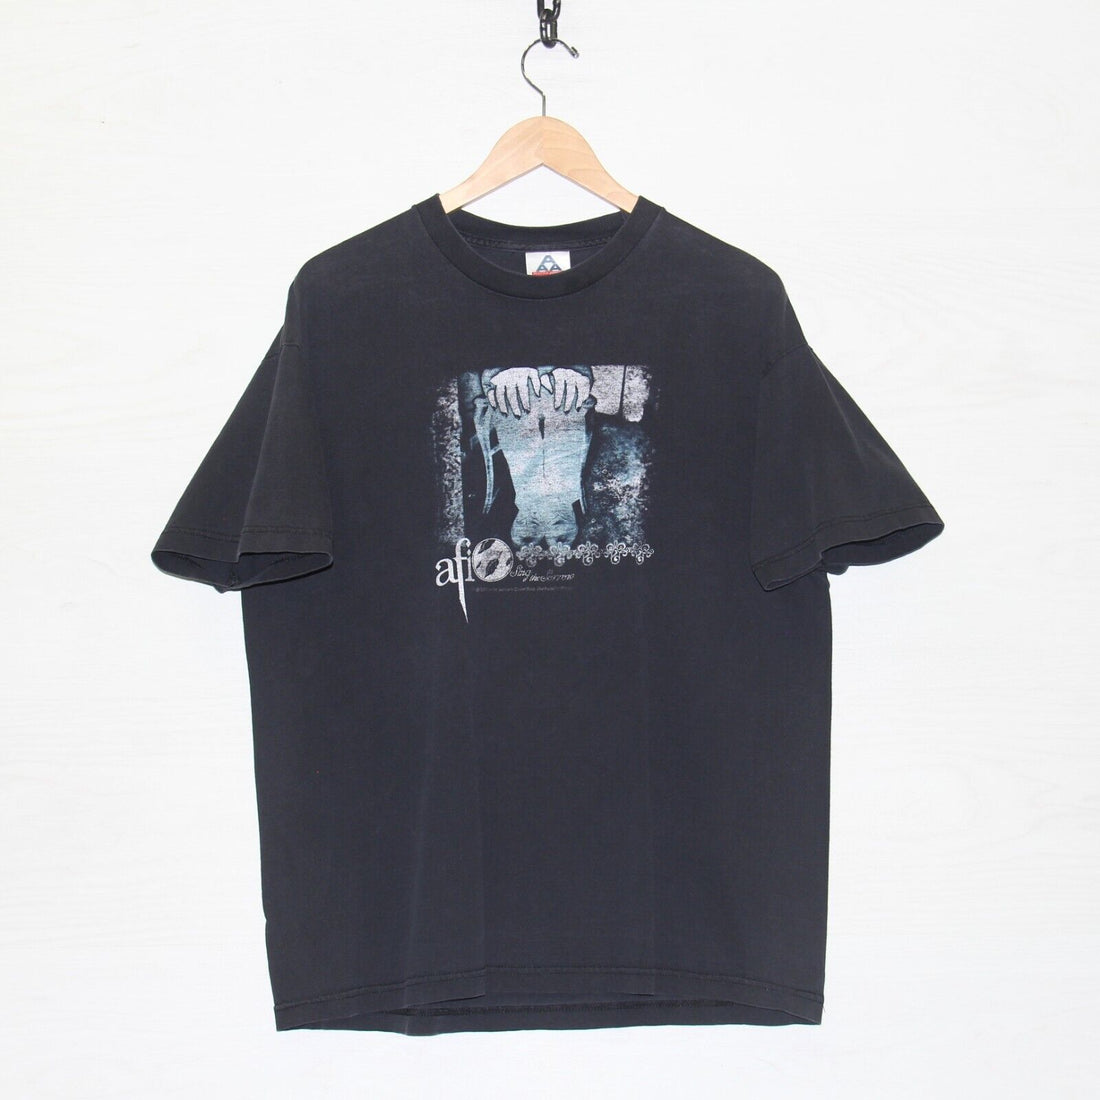 Vintage AFI Sing The Sorrow T-Shirt Size XL Black Band Tee 2003